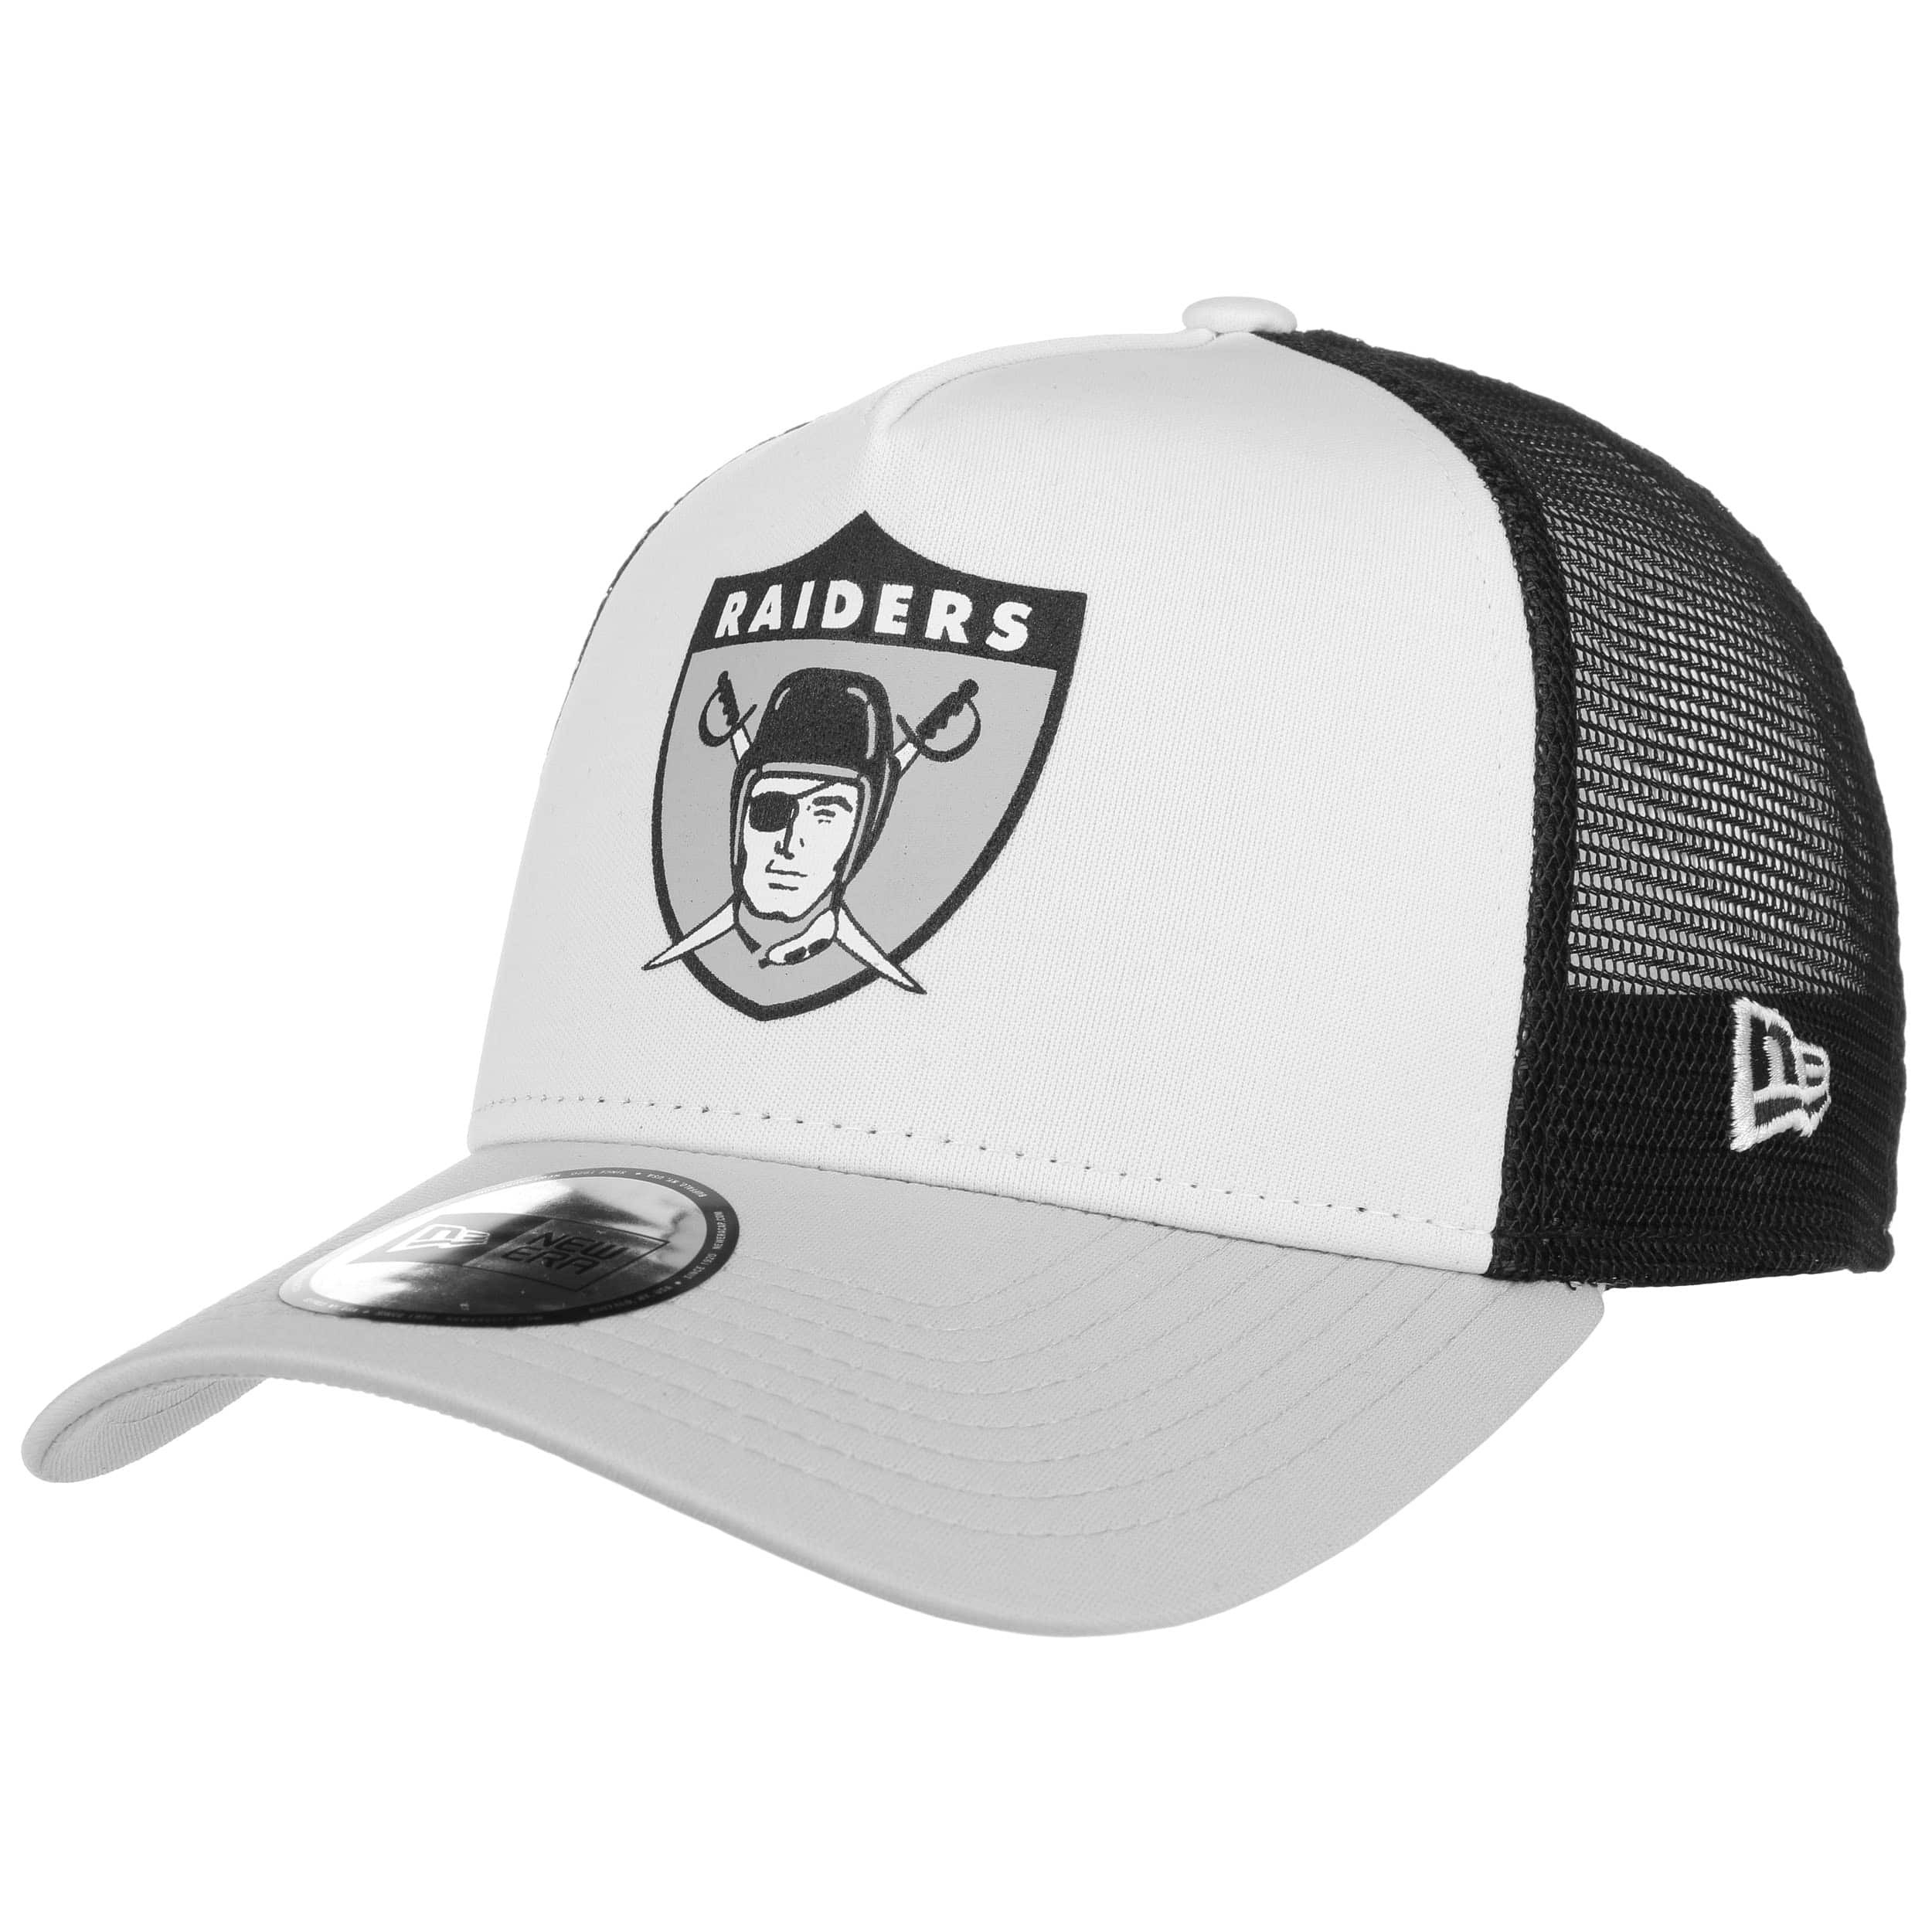 NFL Throwback Raiders Trucker Cap by 